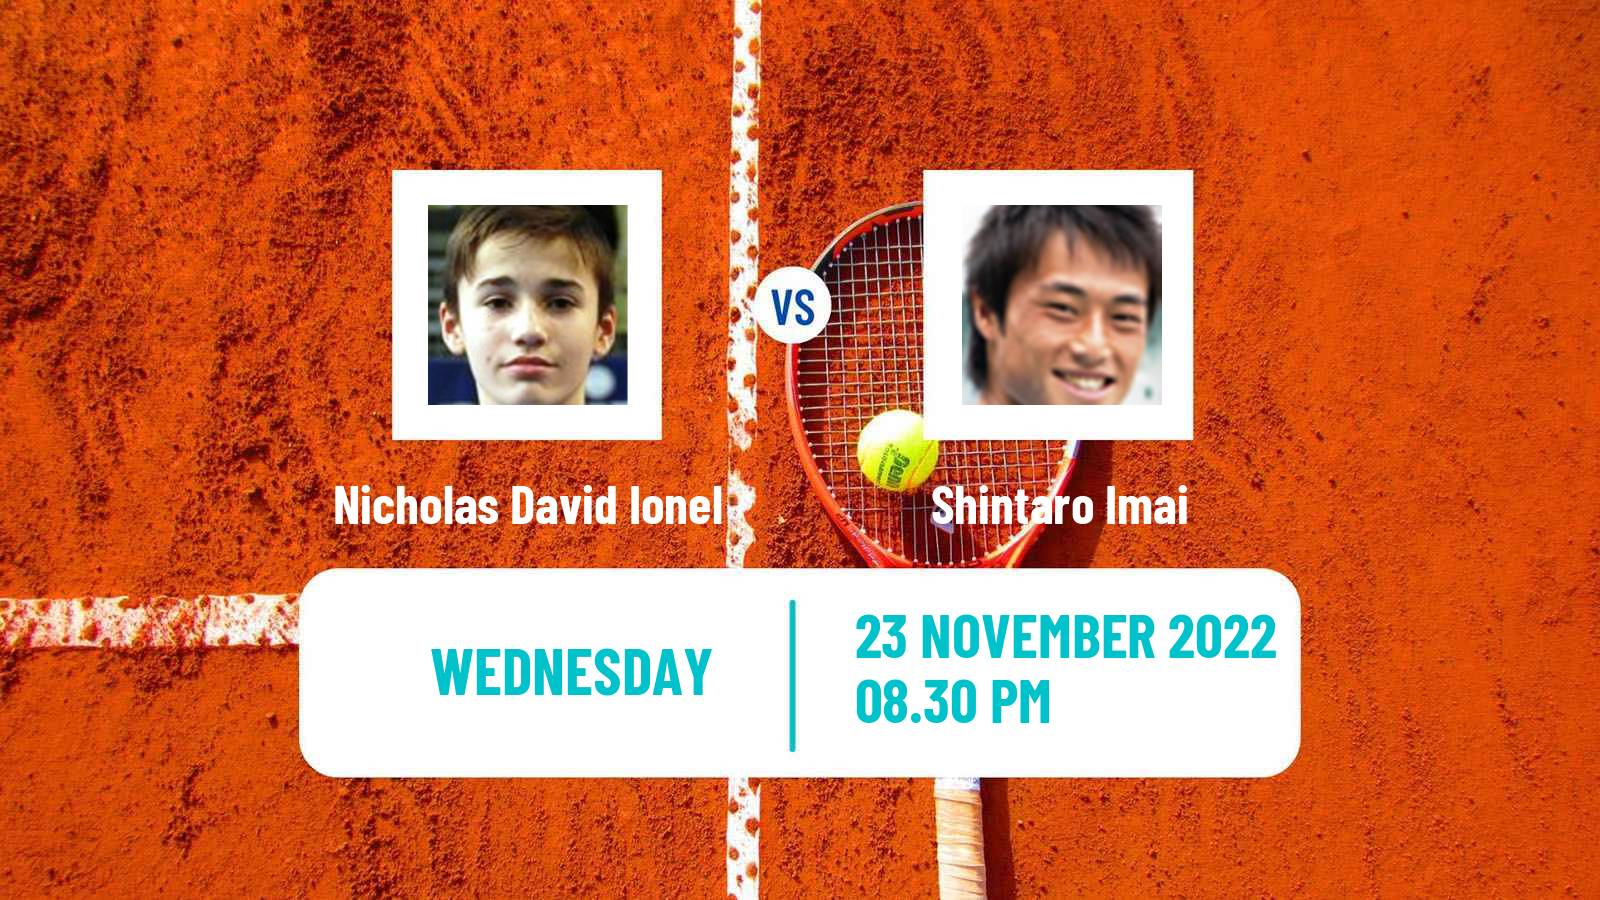 Tennis ATP Challenger Nicholas David Ionel - Shintaro Imai